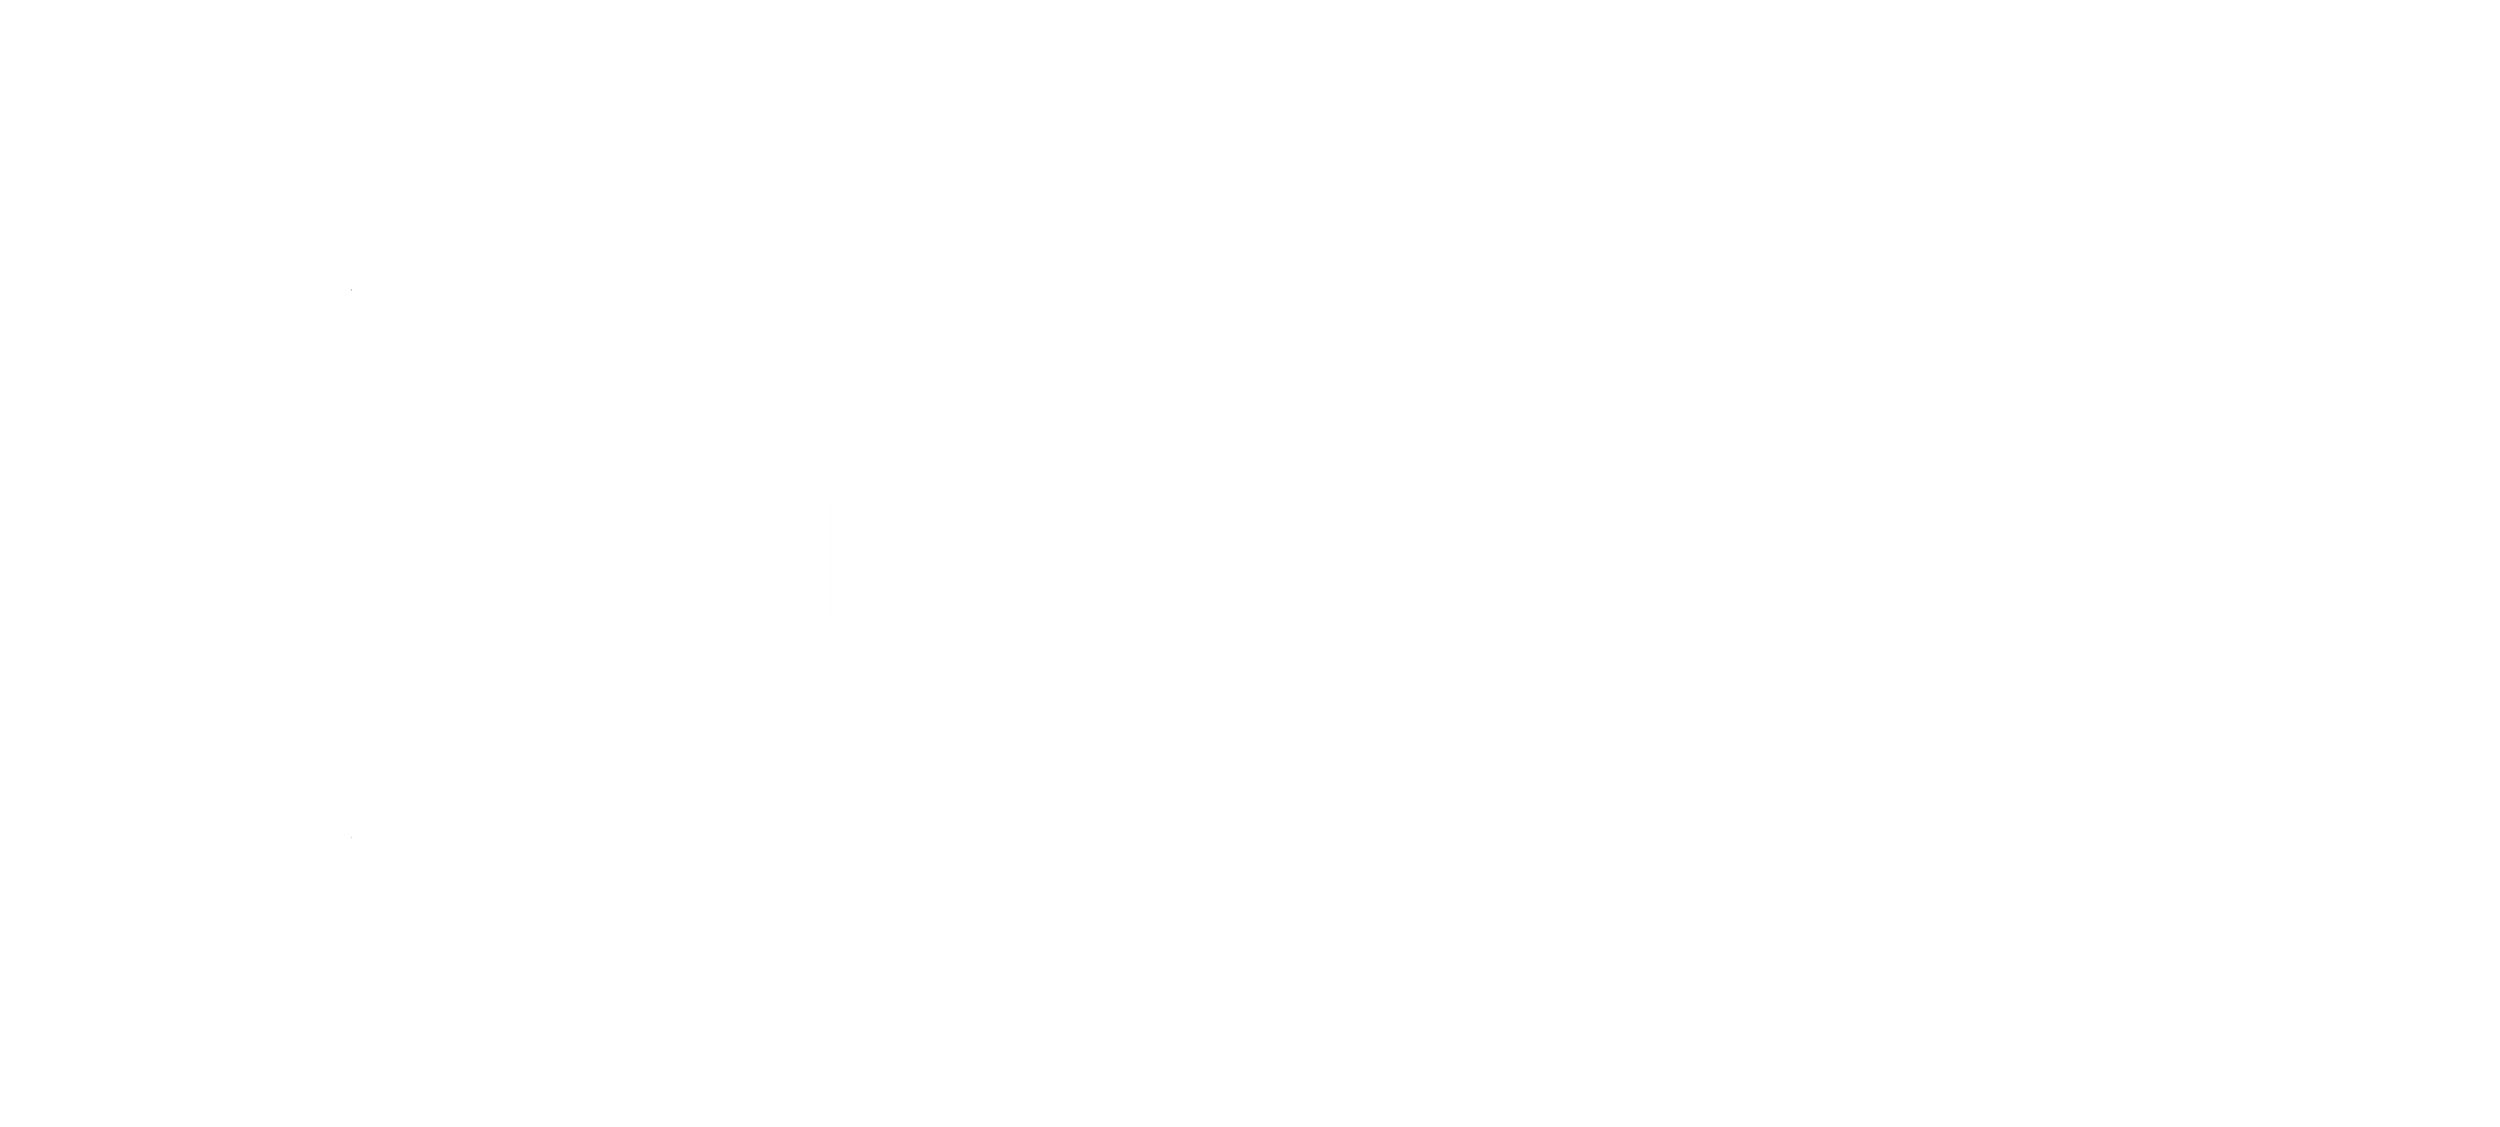  A M Stoneworks